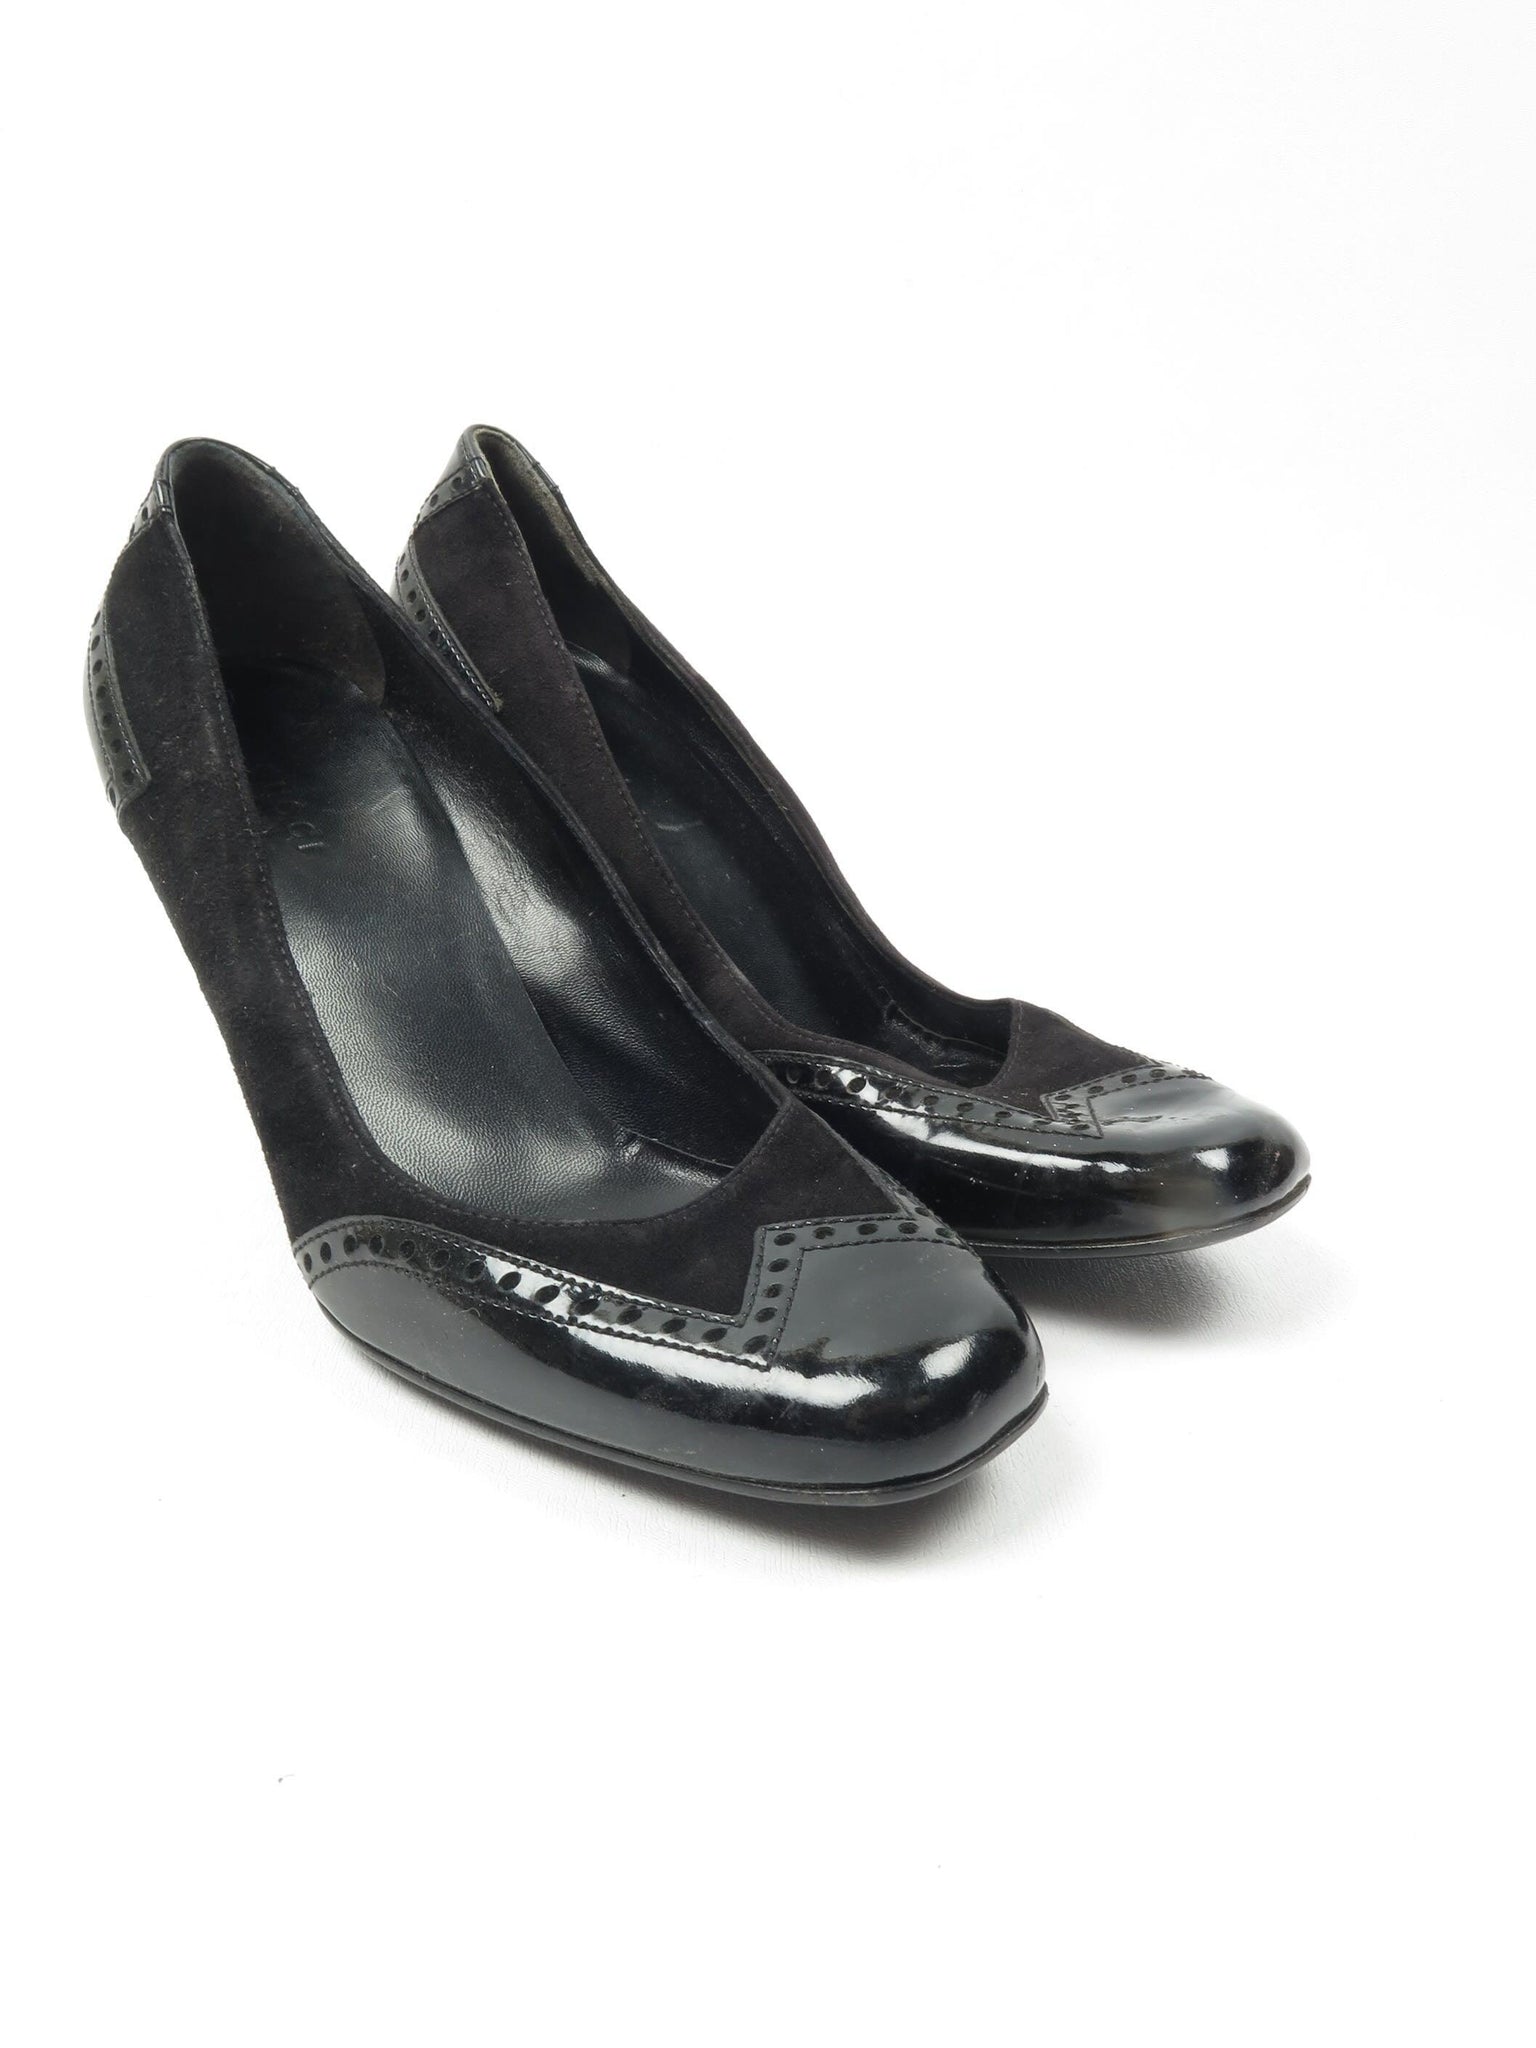 Women's Black Vintage Gucci Shoes 4.5 37.5 - The Harlequin